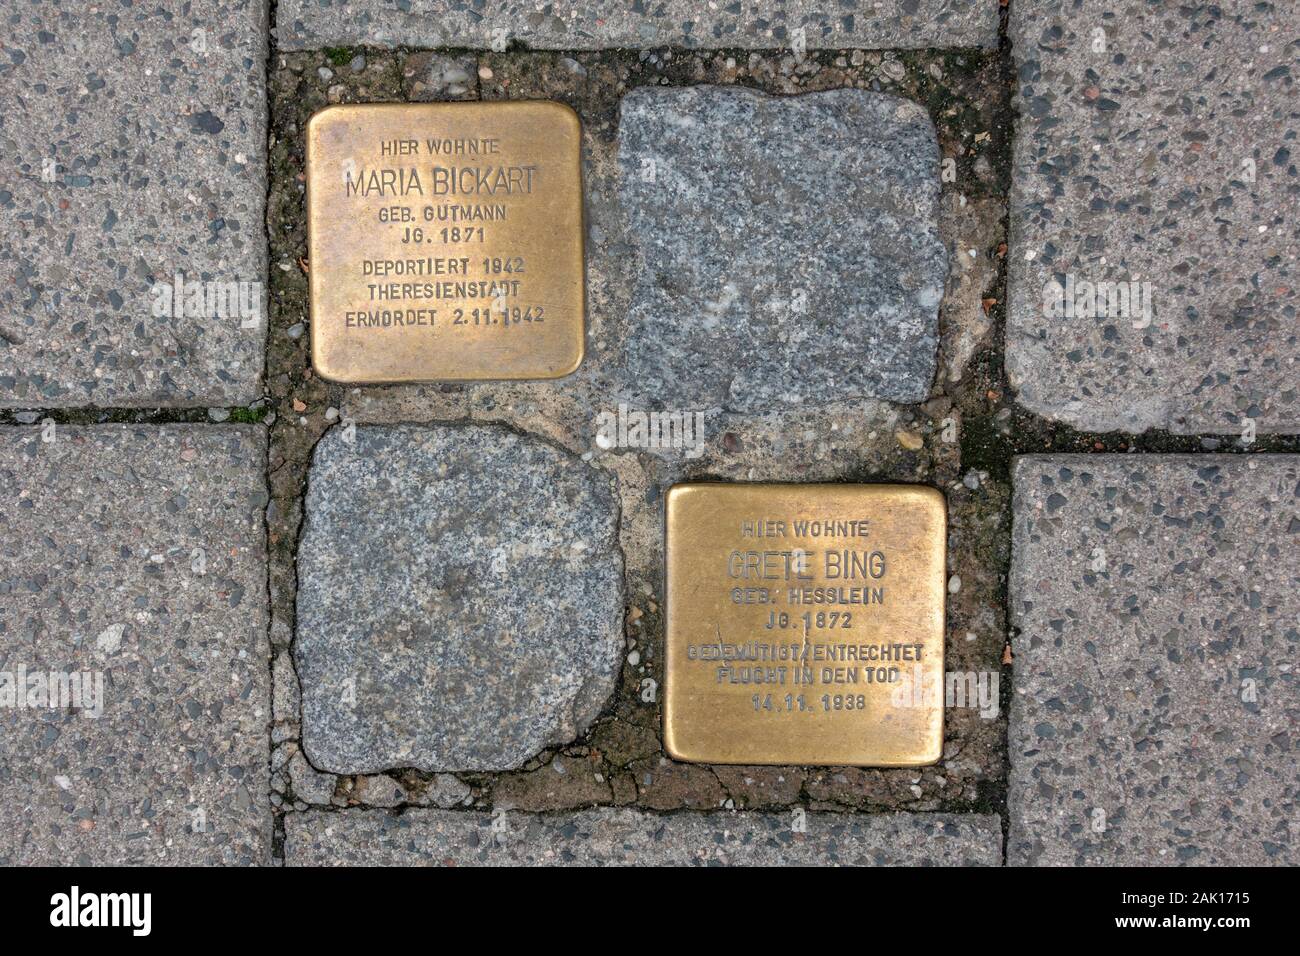 'Stumbling stones' Holocaust memorial markers for Maria Bickart and Grete Bing in Coburg, Bavaria, Germany. Stock Photo